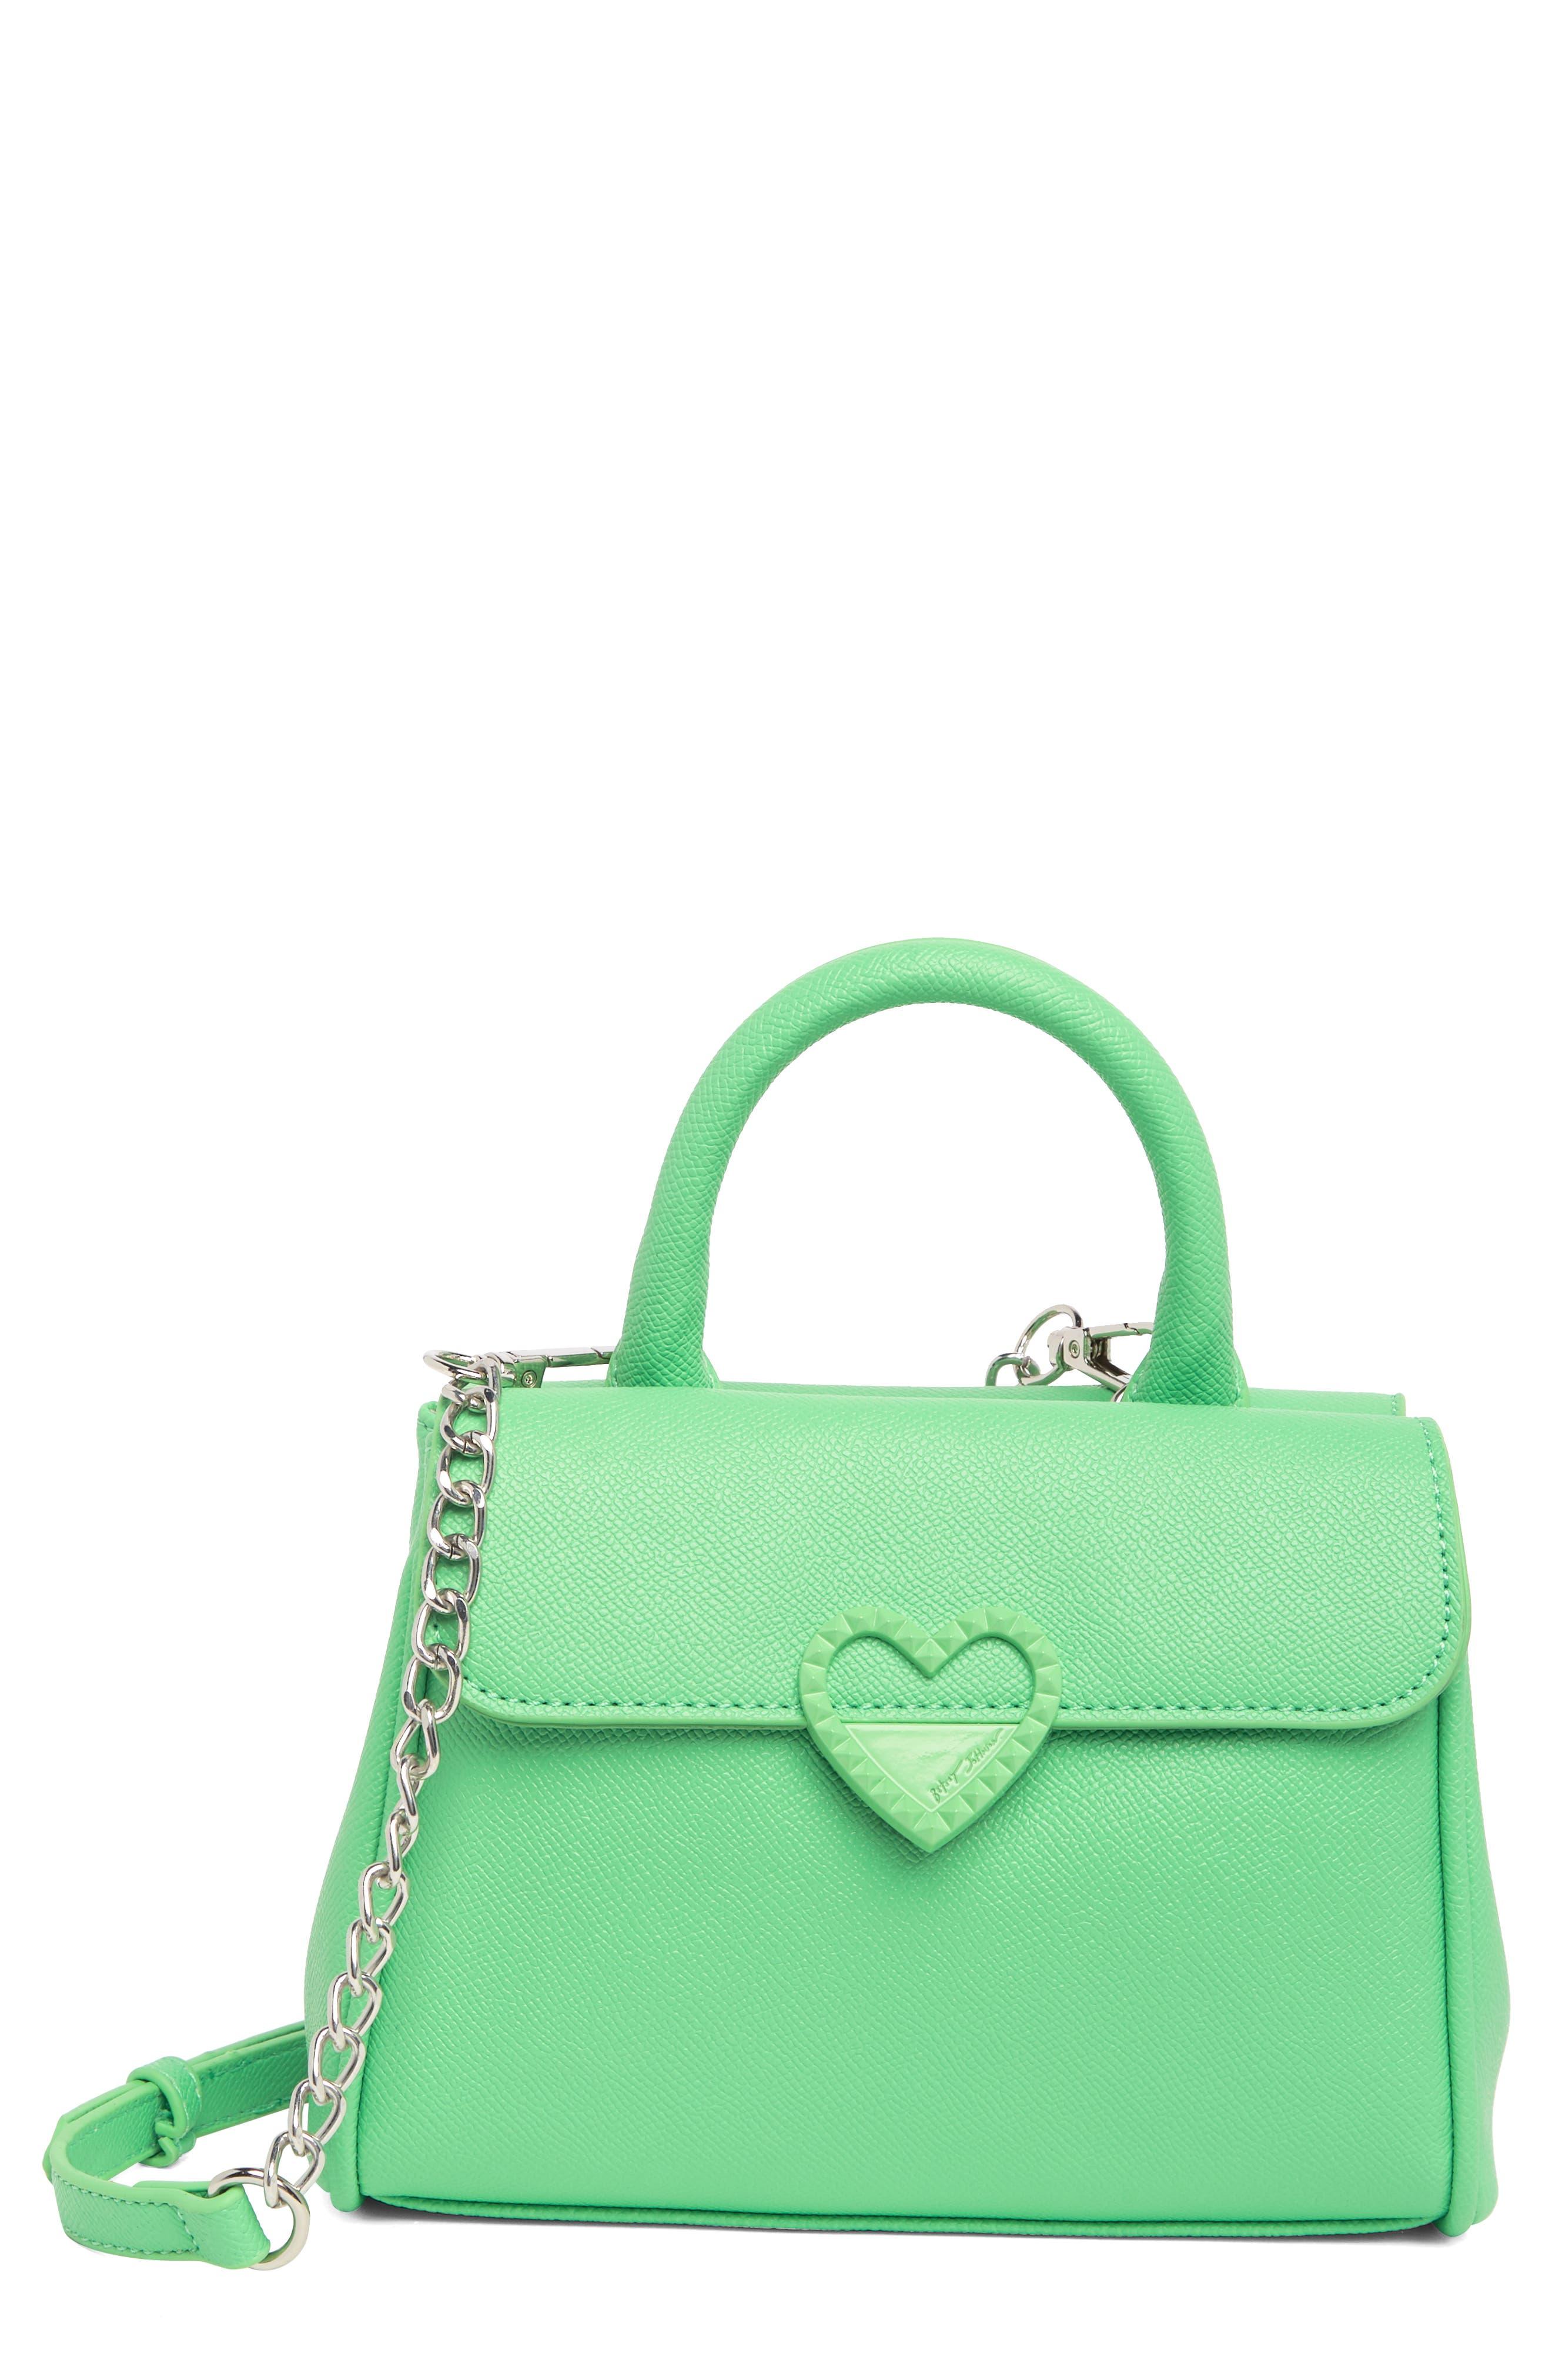 NEW Betsey Johnson Blush Pink Embossed Heart Satchel Purse Handbag | Purses  and handbags, Satchel purse, Handbag